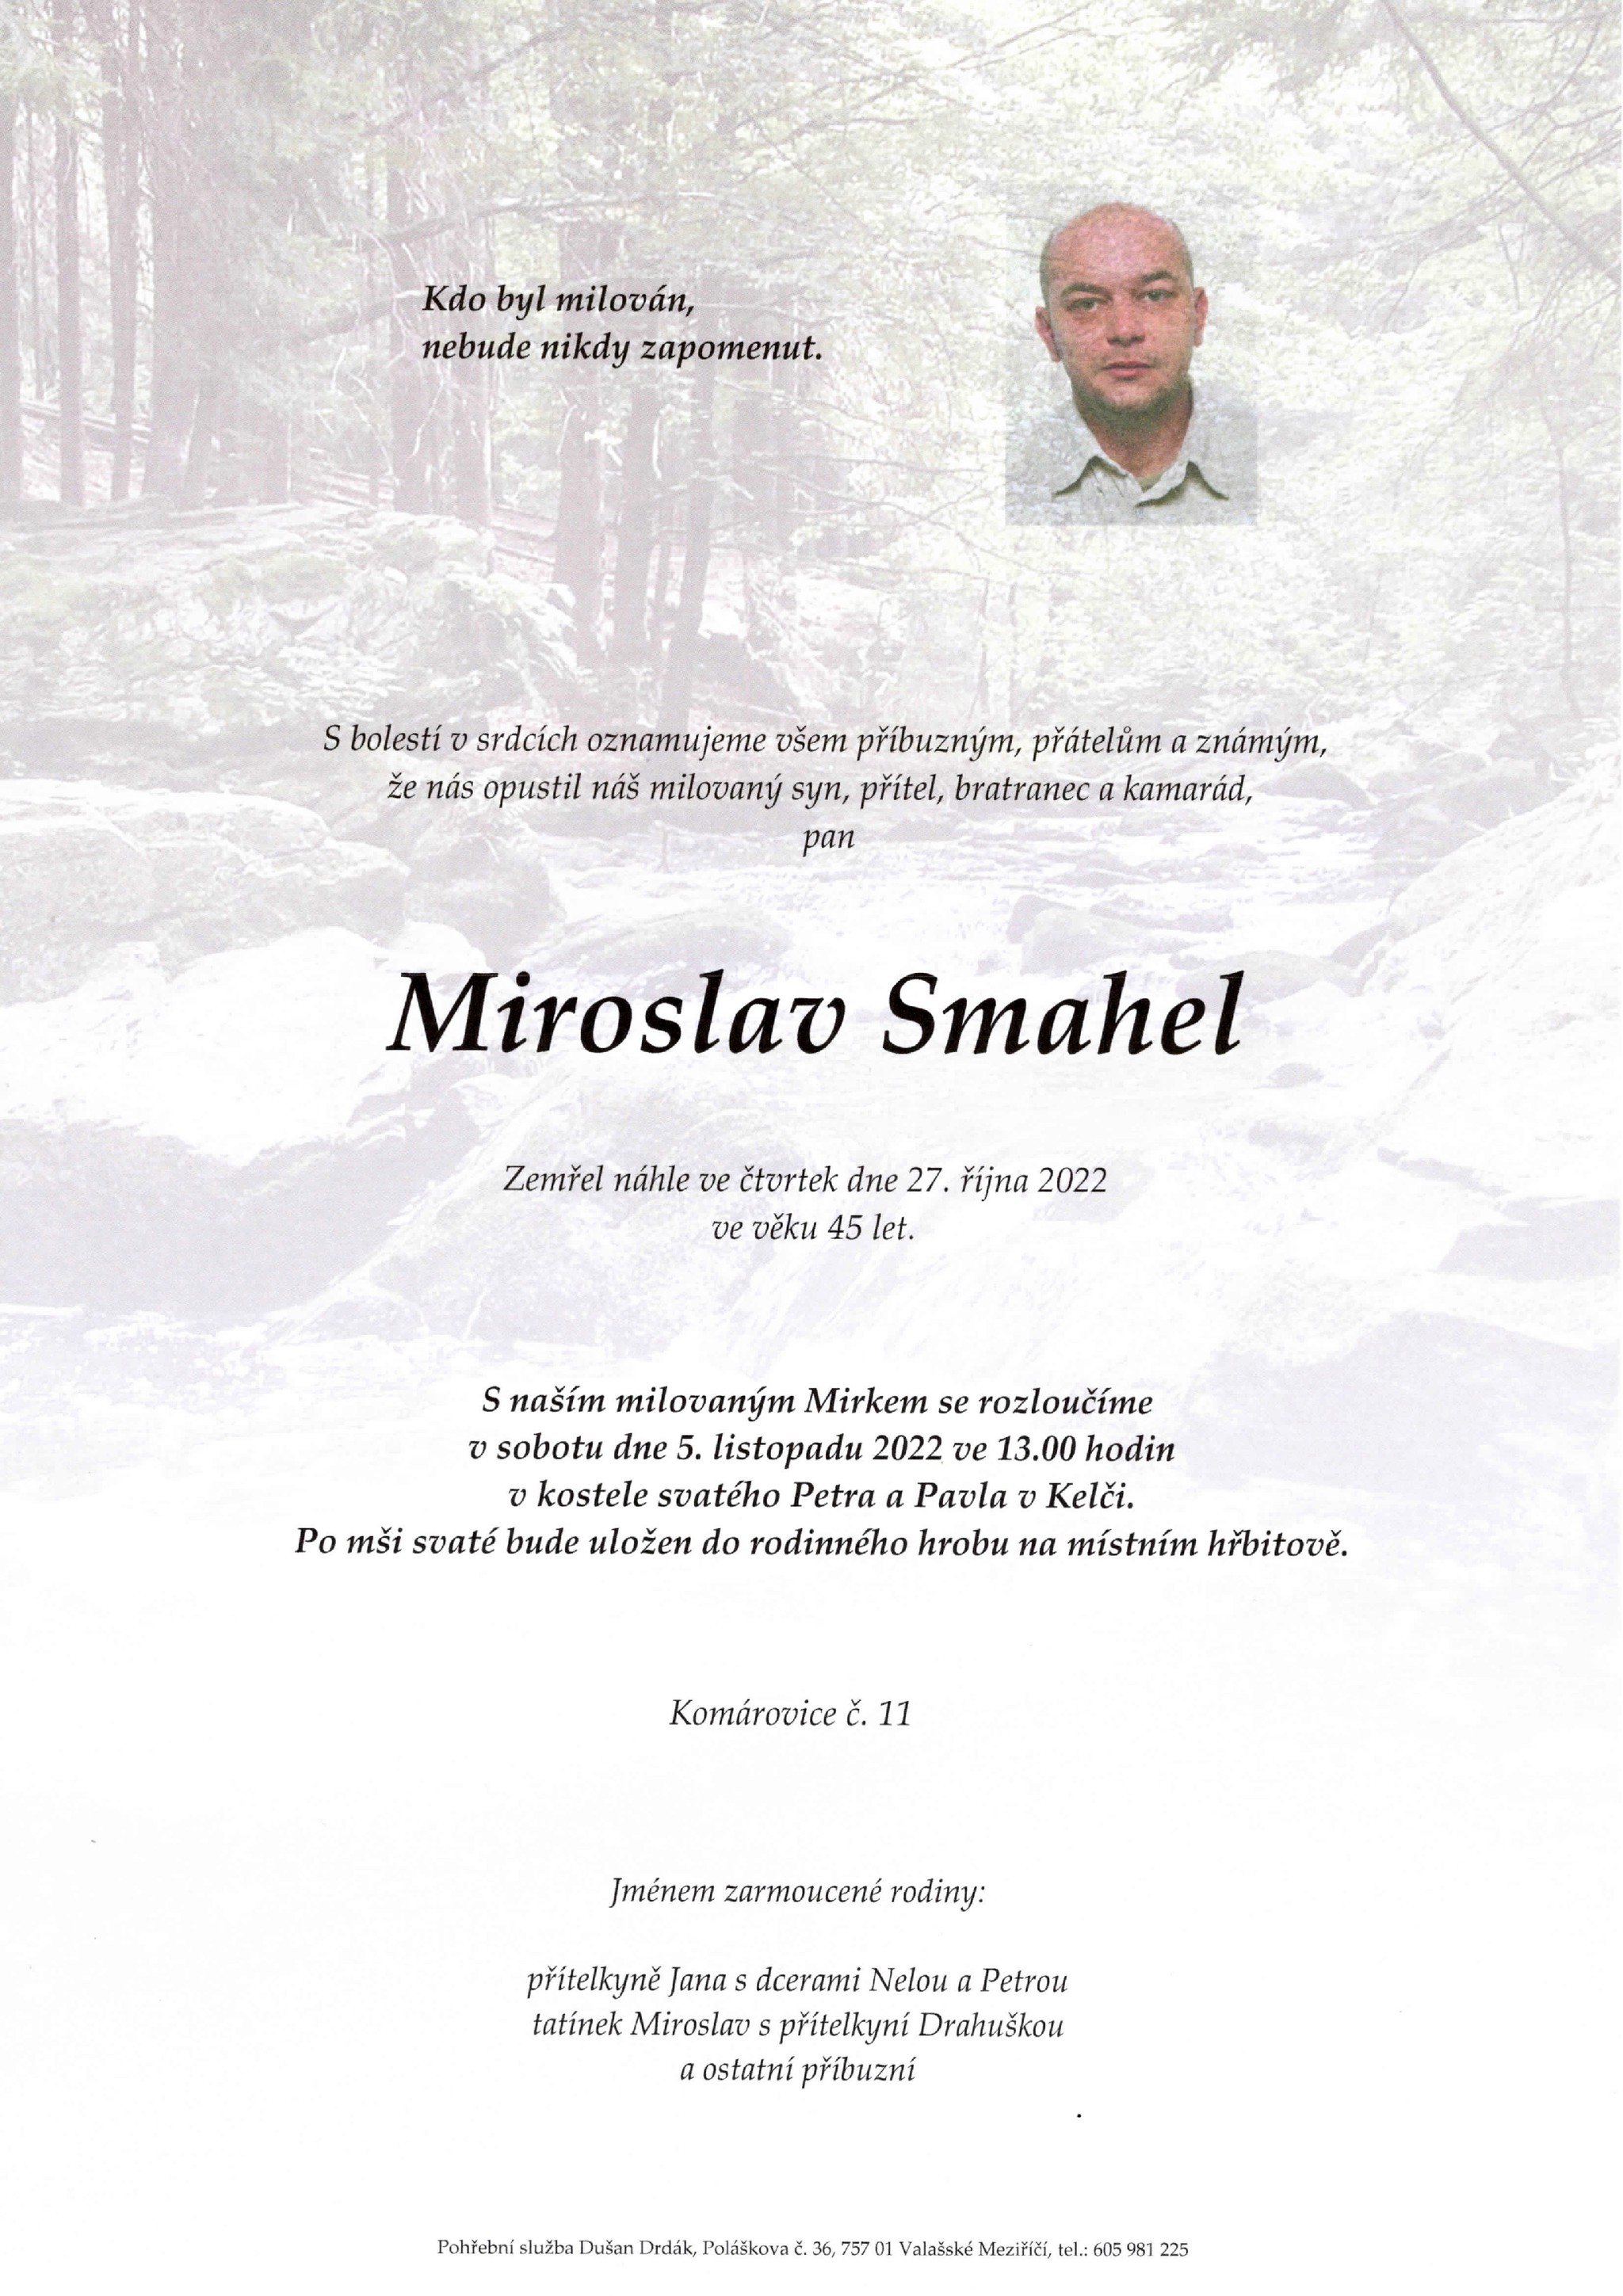 Miroslav Smahel